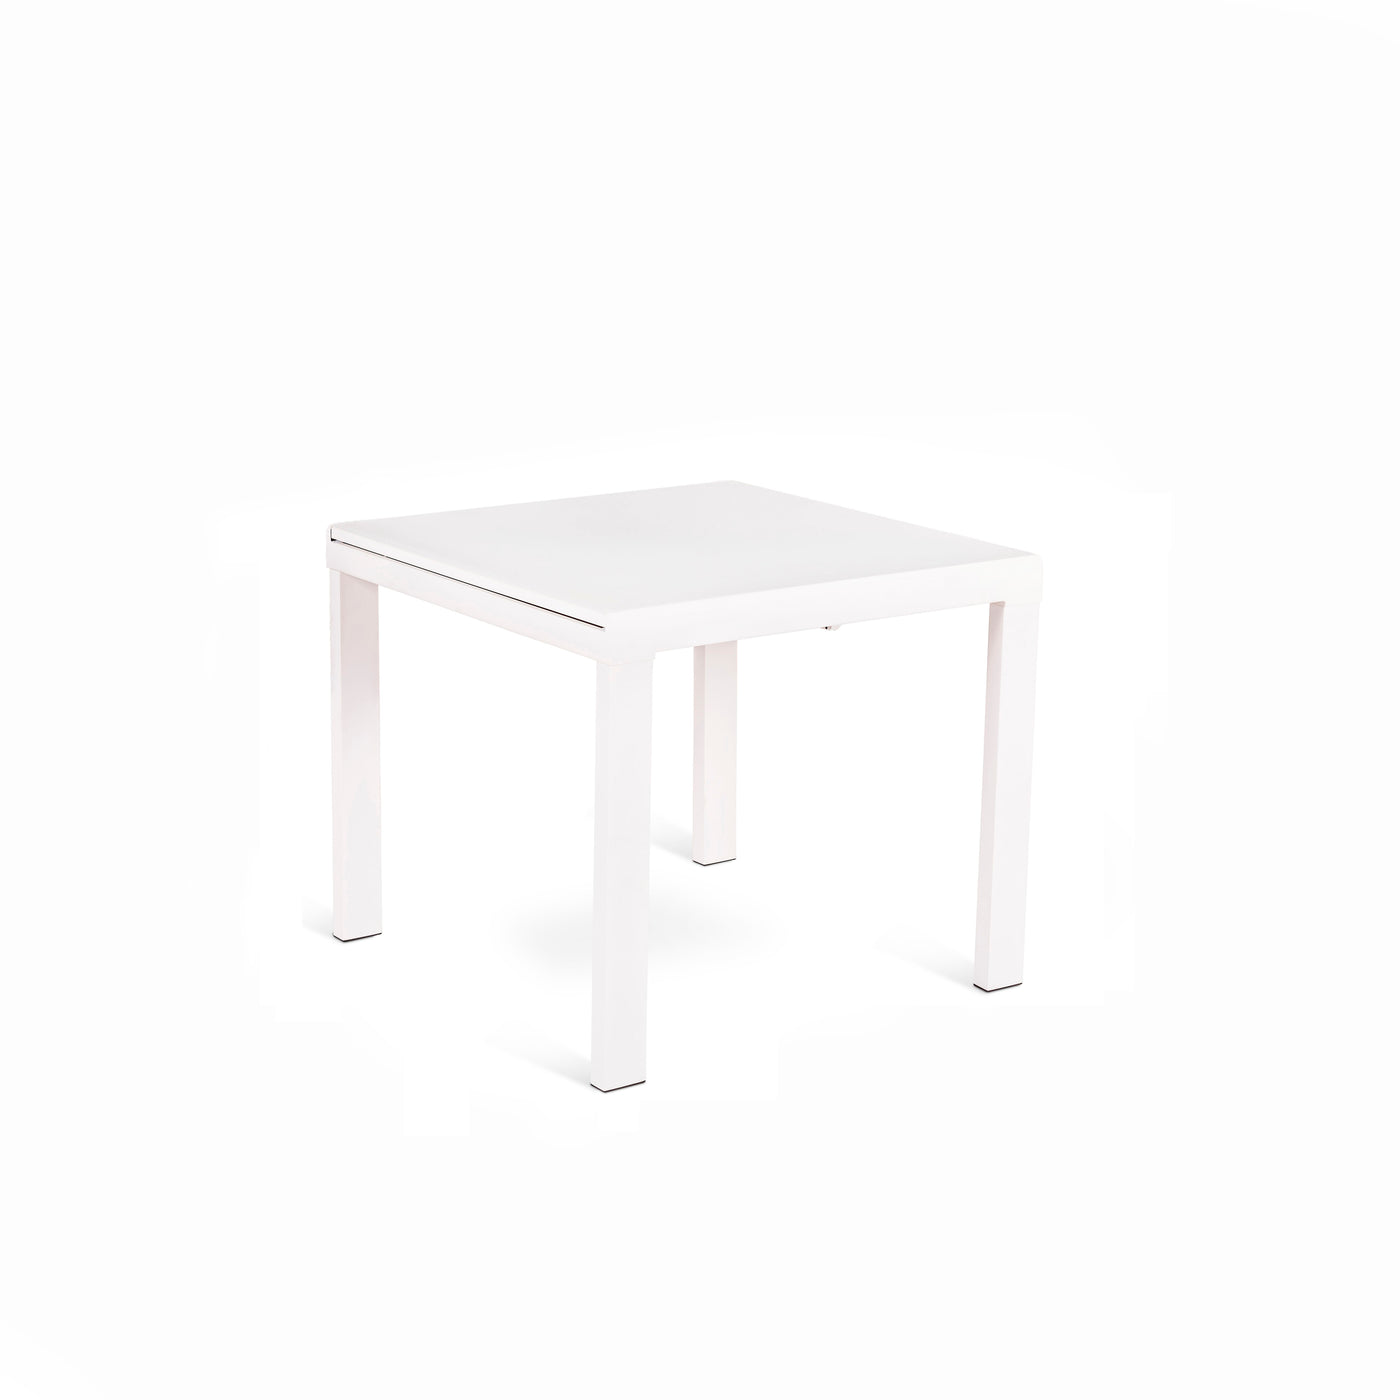 White BART extendable table